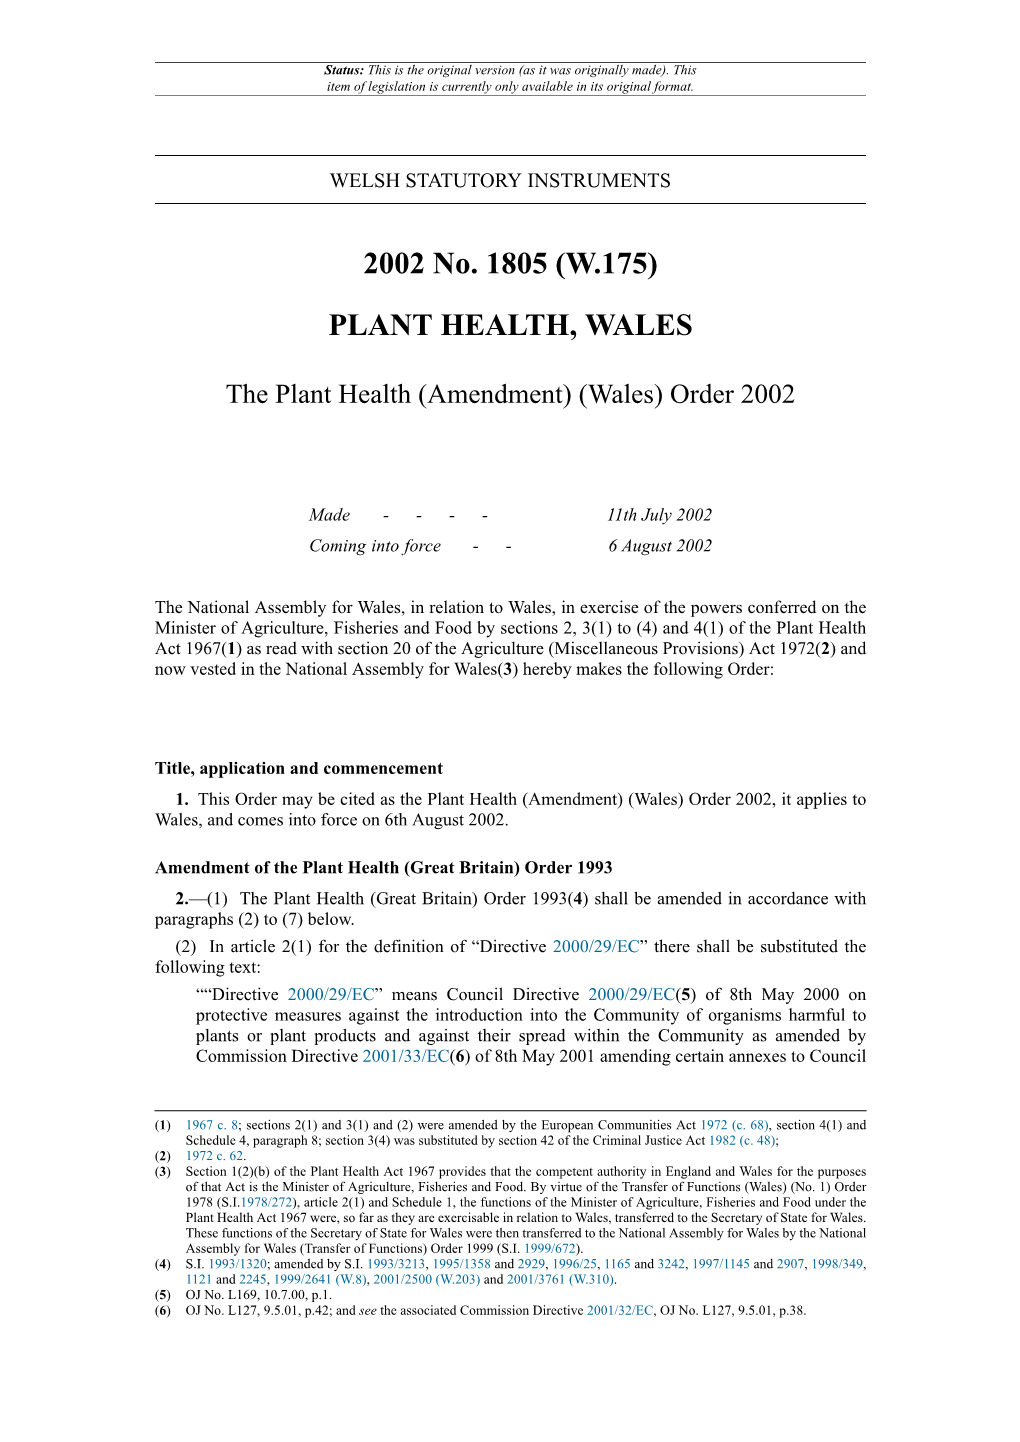 The Plant Health (Amendment) (Wales) Order 2002